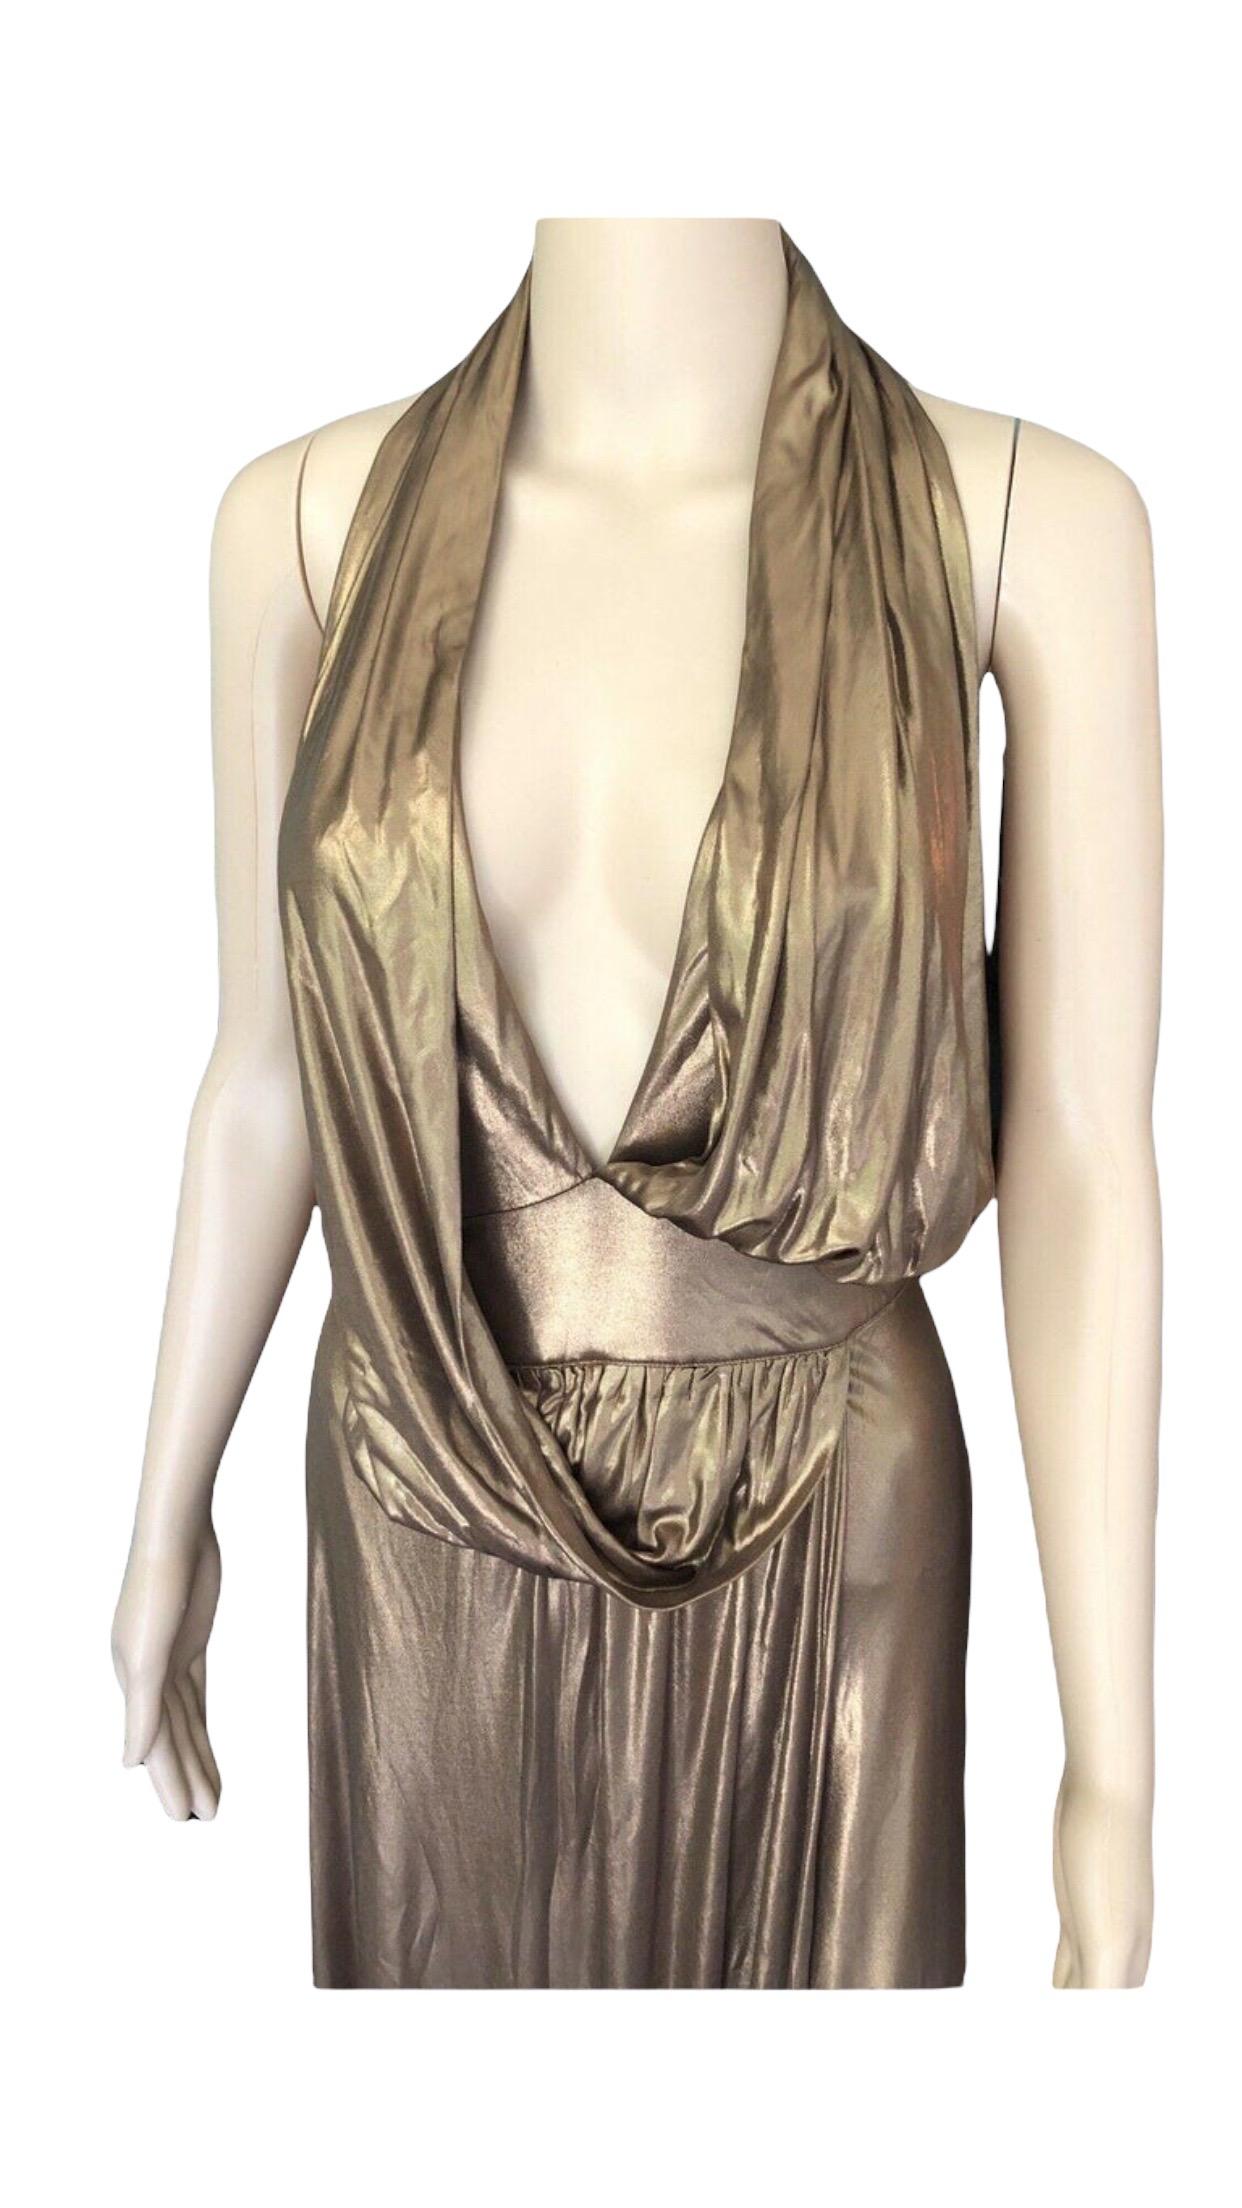 Women's Gucci Runway F/W 2006 Plunging Neckline Backless Gold Metallic Dress Gown